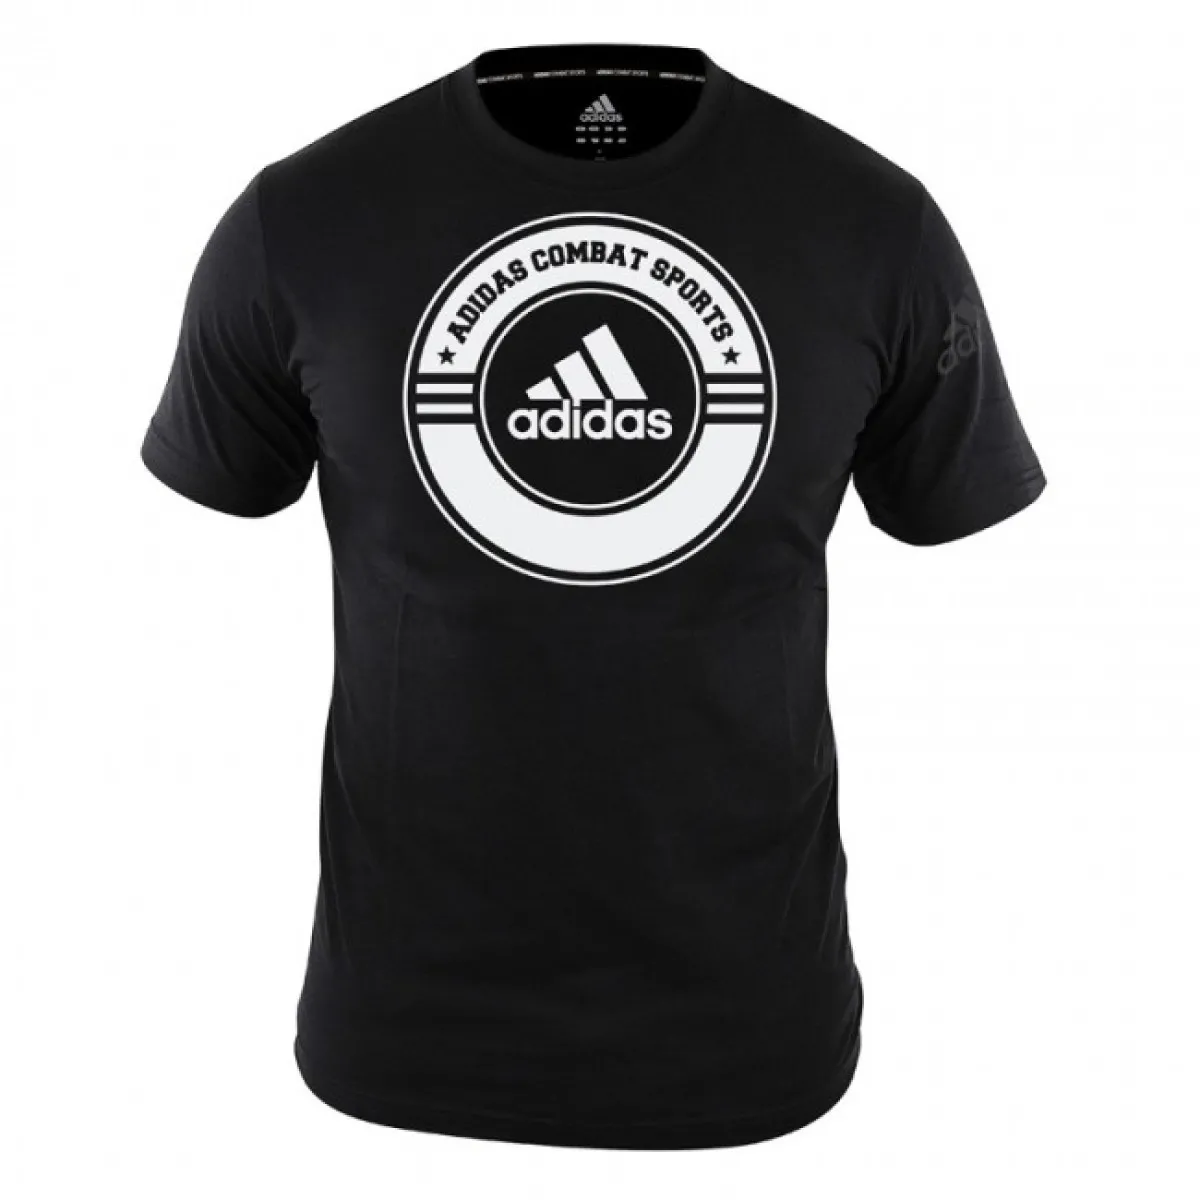 adidas T-Shirt Combat Sports black/white